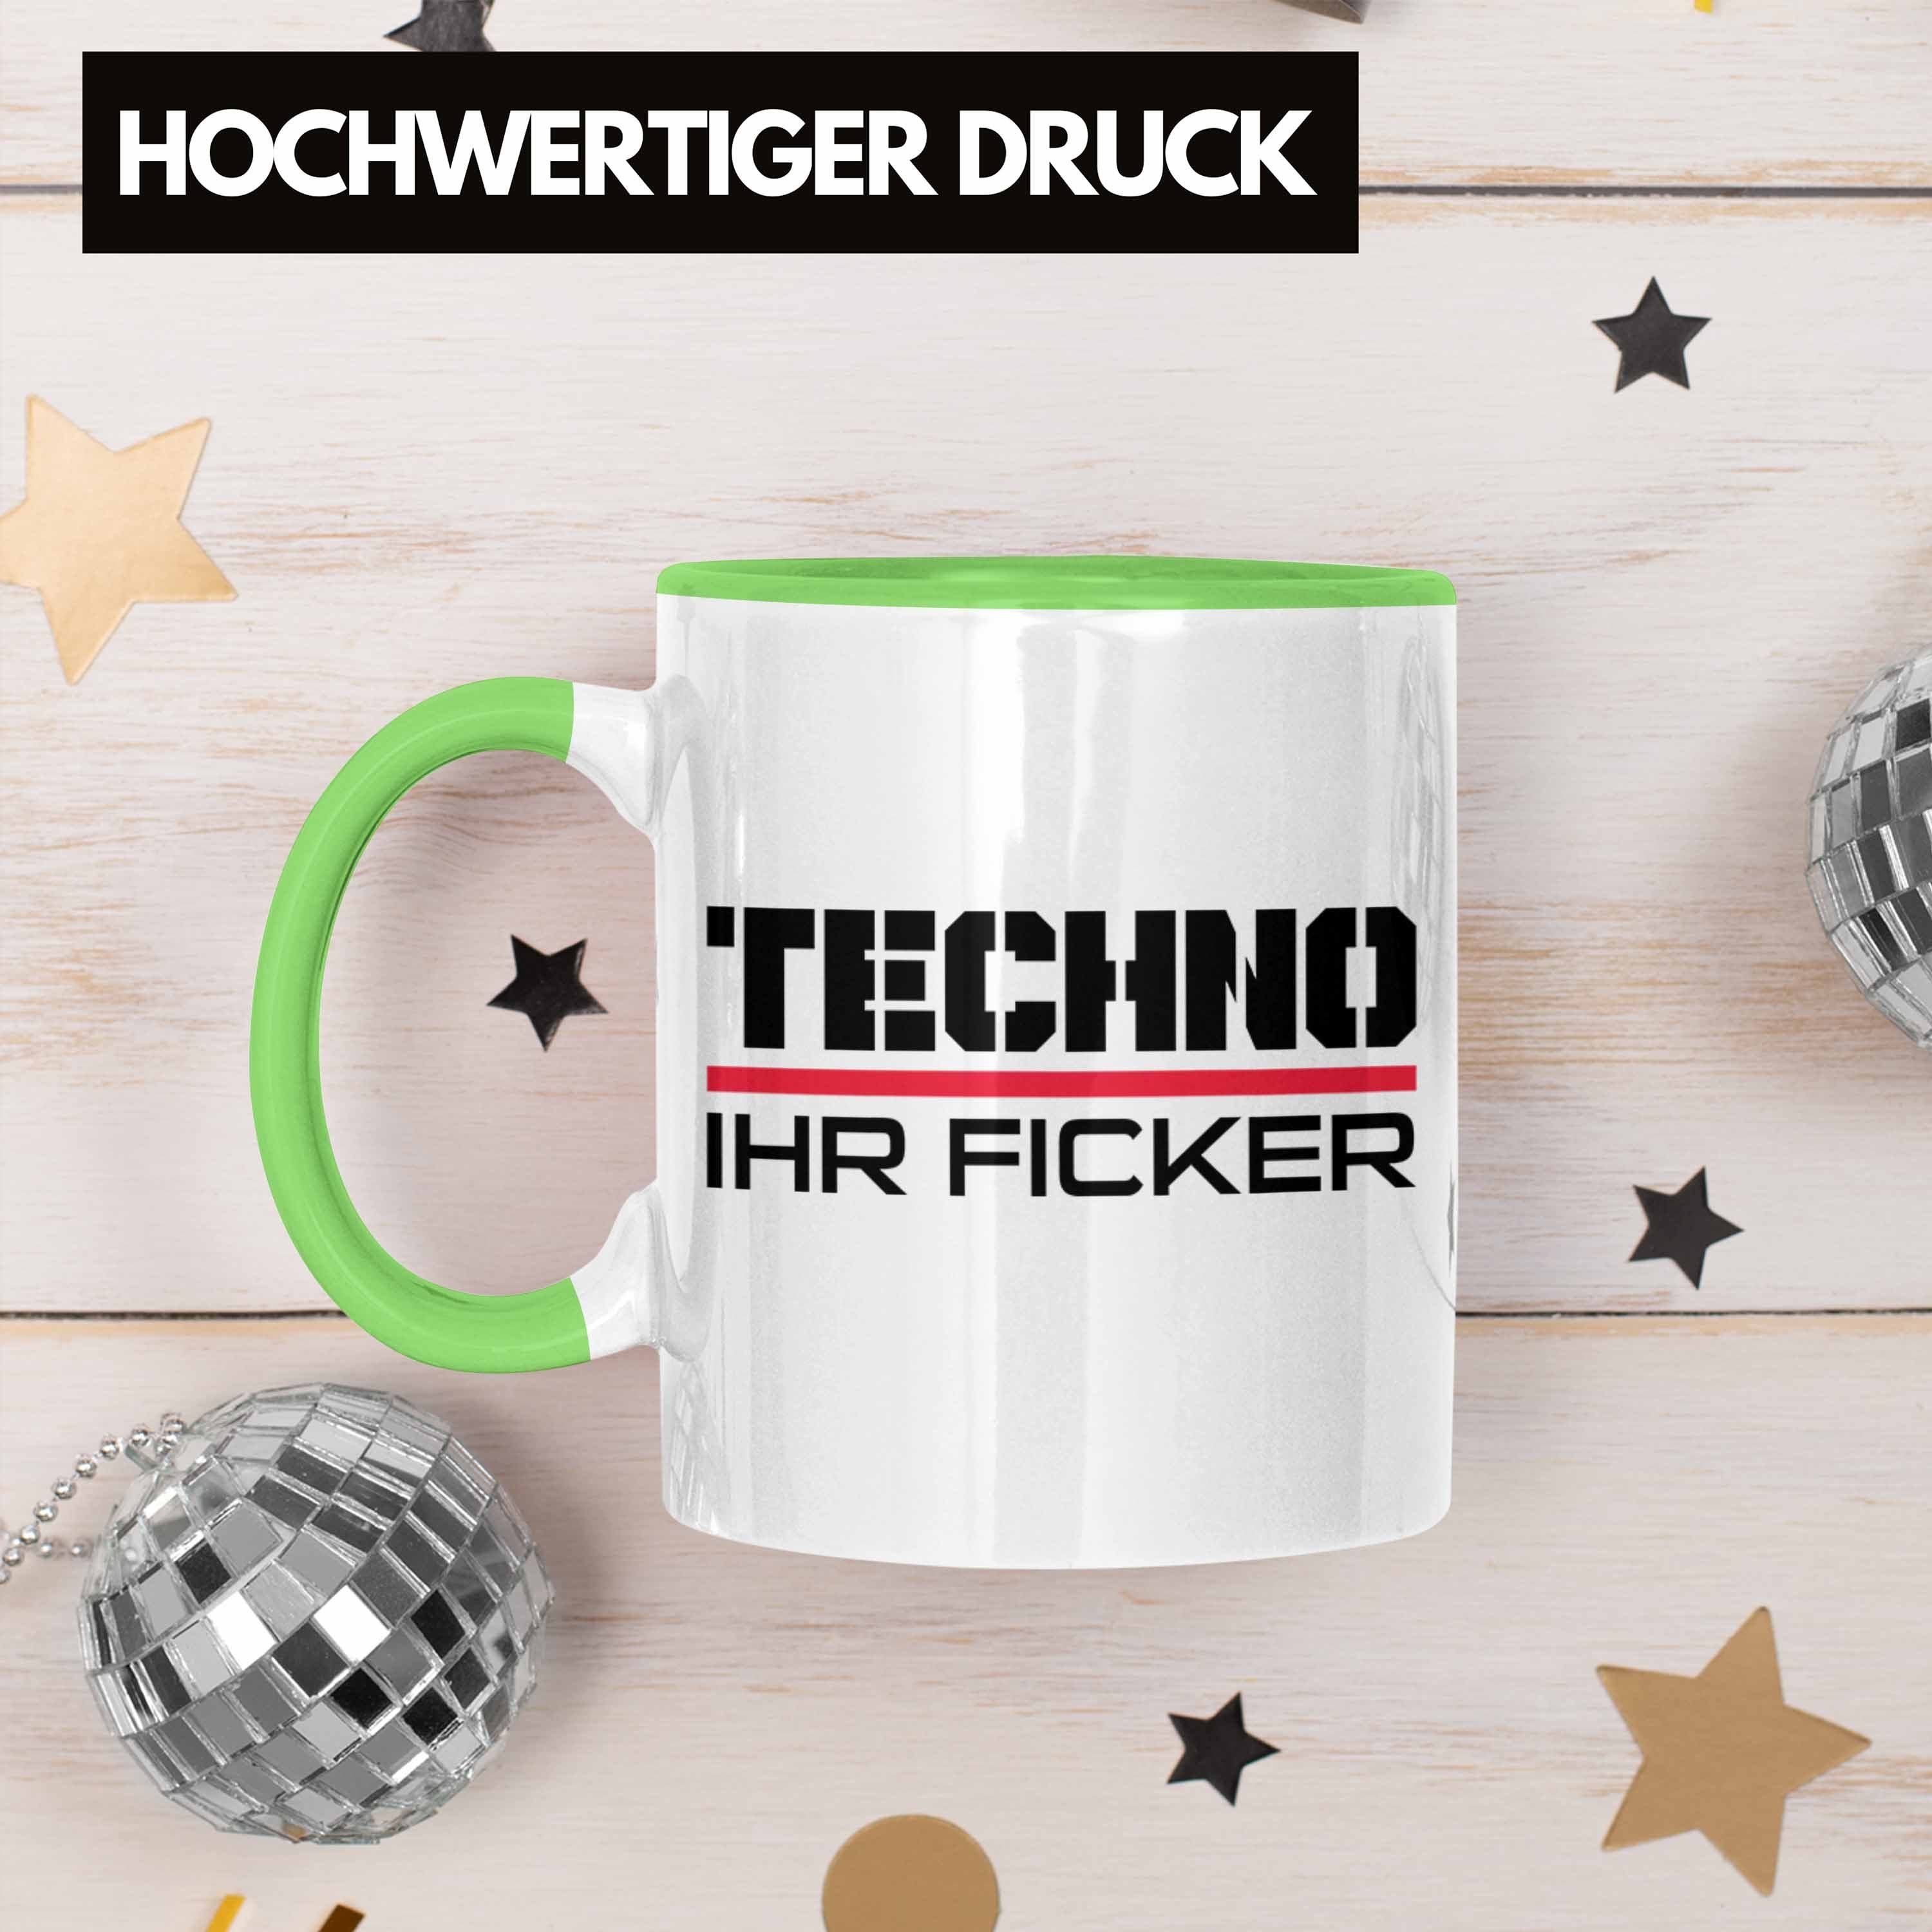 Trendation Techno - HardTekk Fans Tasse F**** Geschenk Raven Tasse Grün Tekk Techno Ihr Trendation